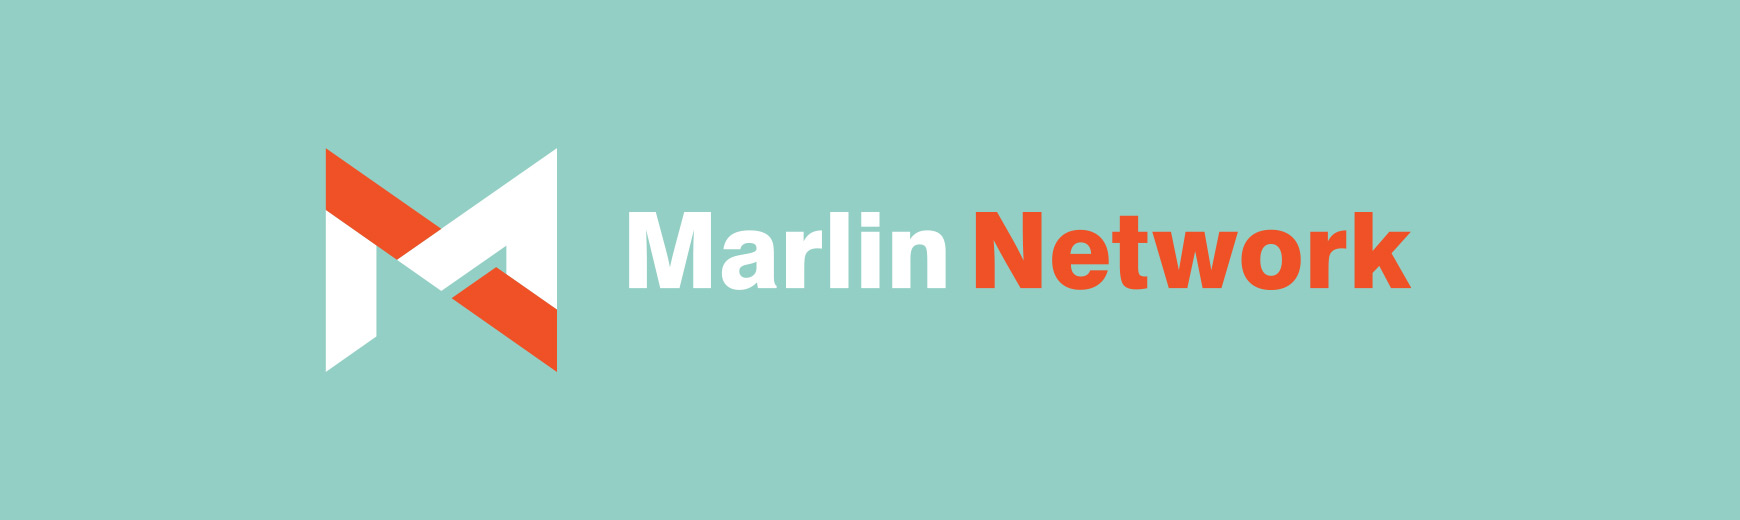 The Marlin Network Logo